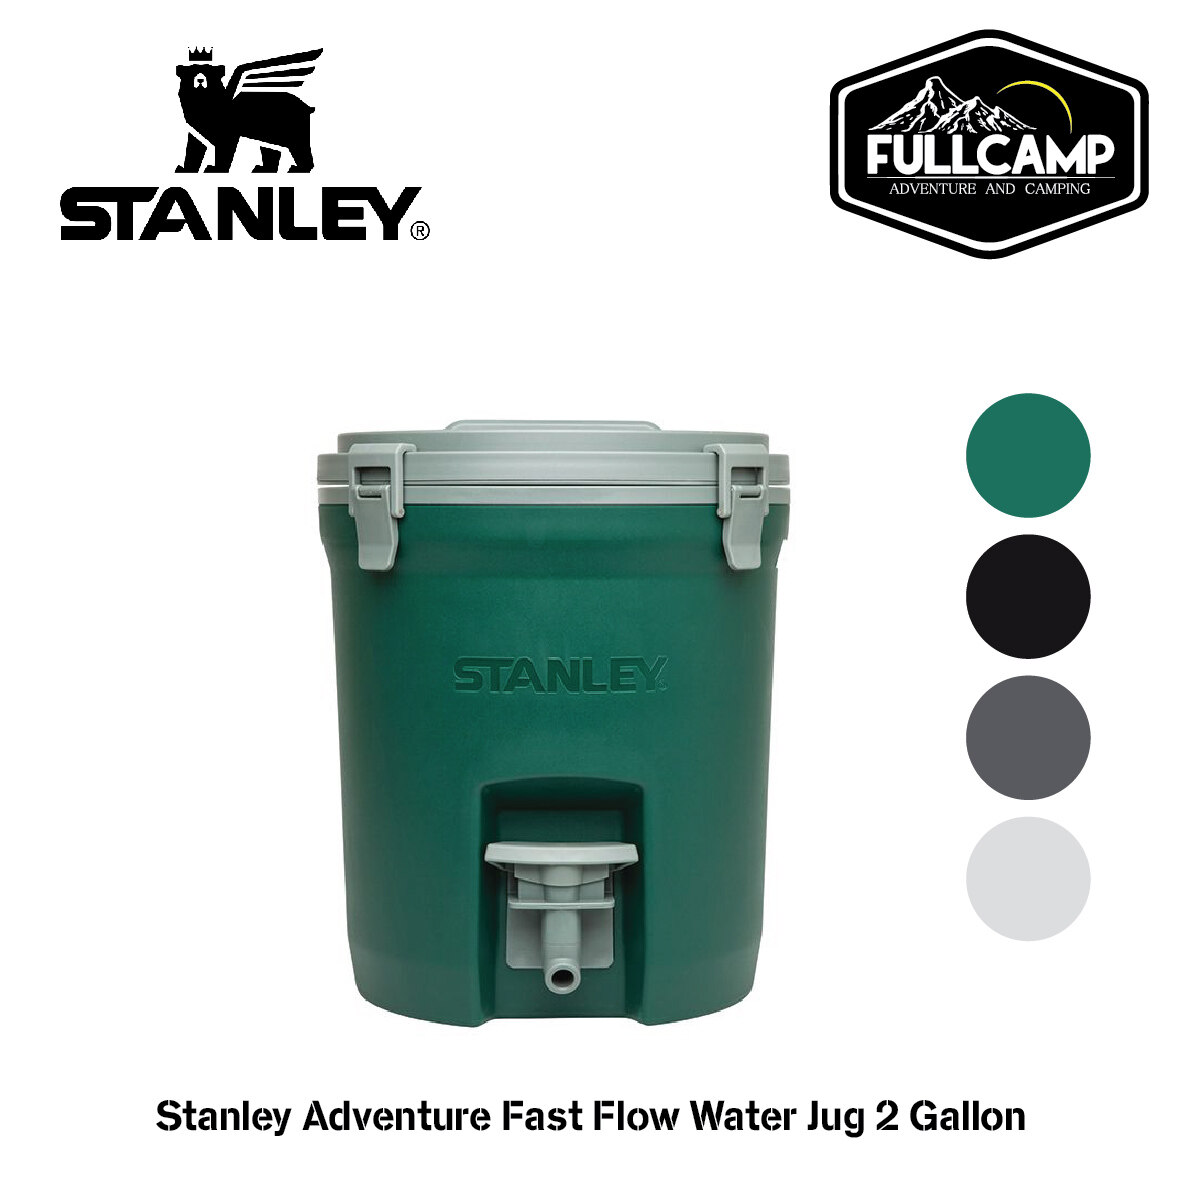 Stanley Adventure Fast Flow Water Jug 2 Gallon